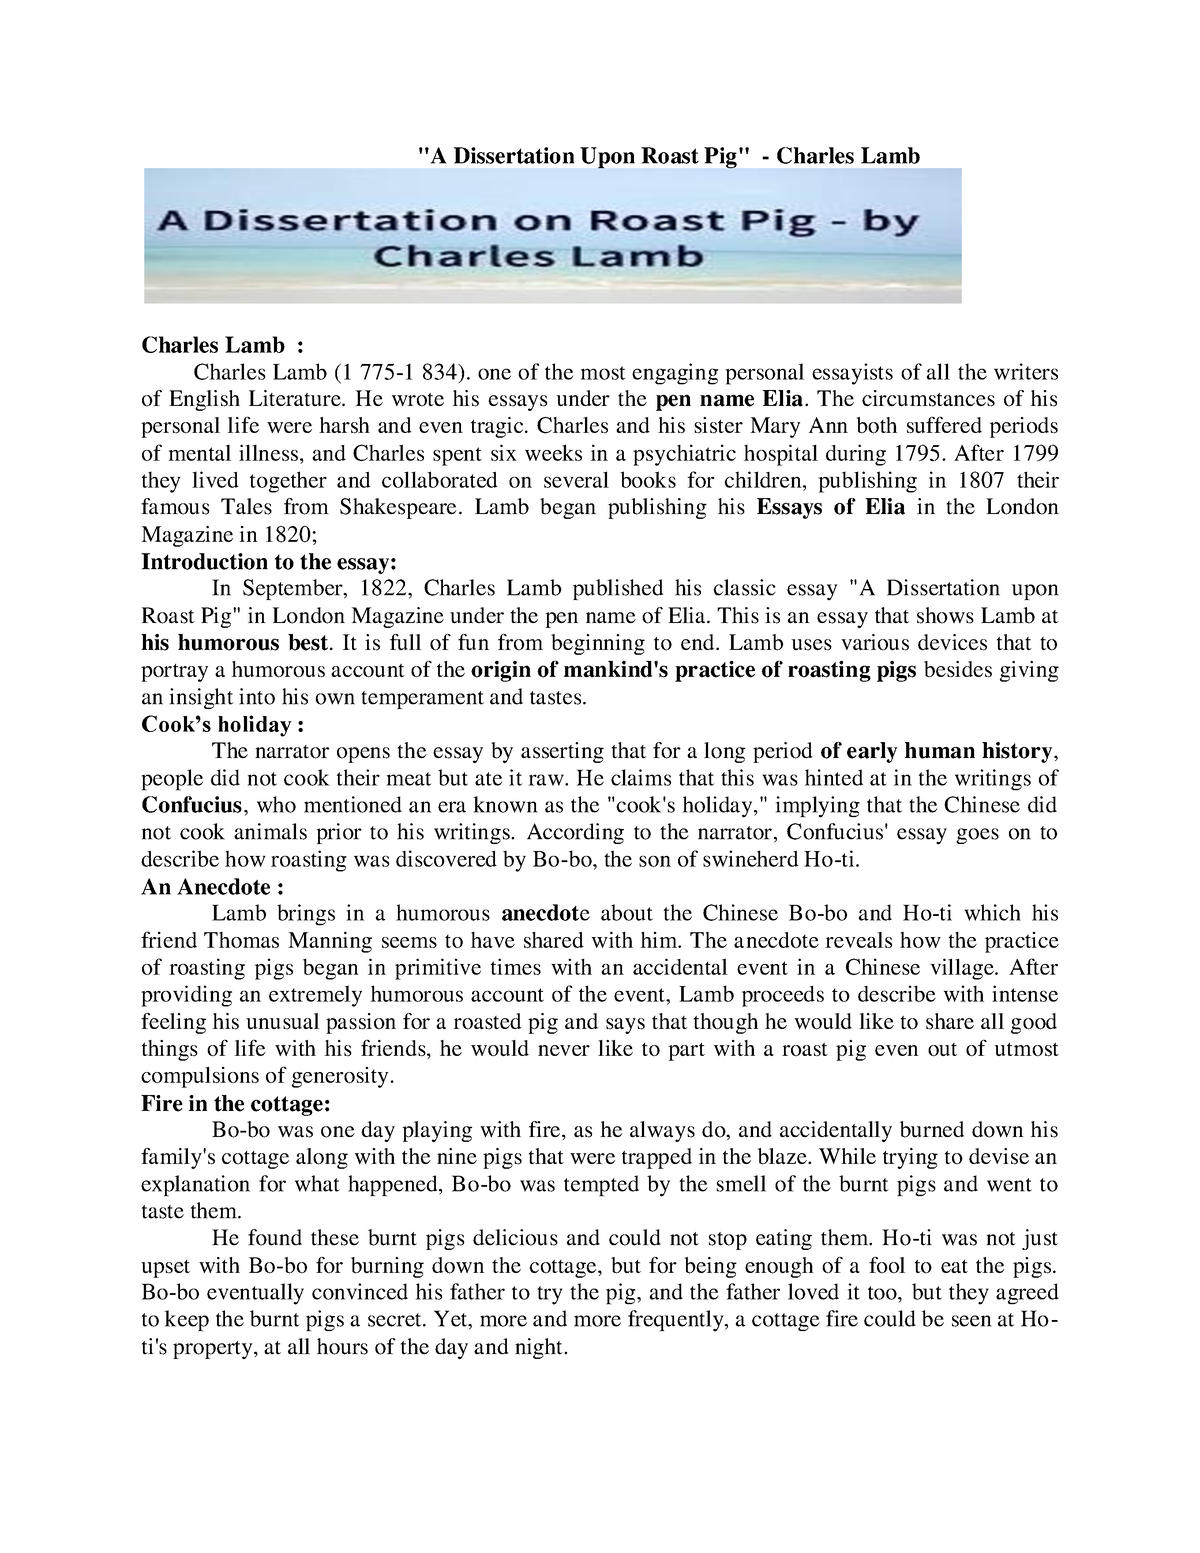 summary of a dissertation upon roast pig